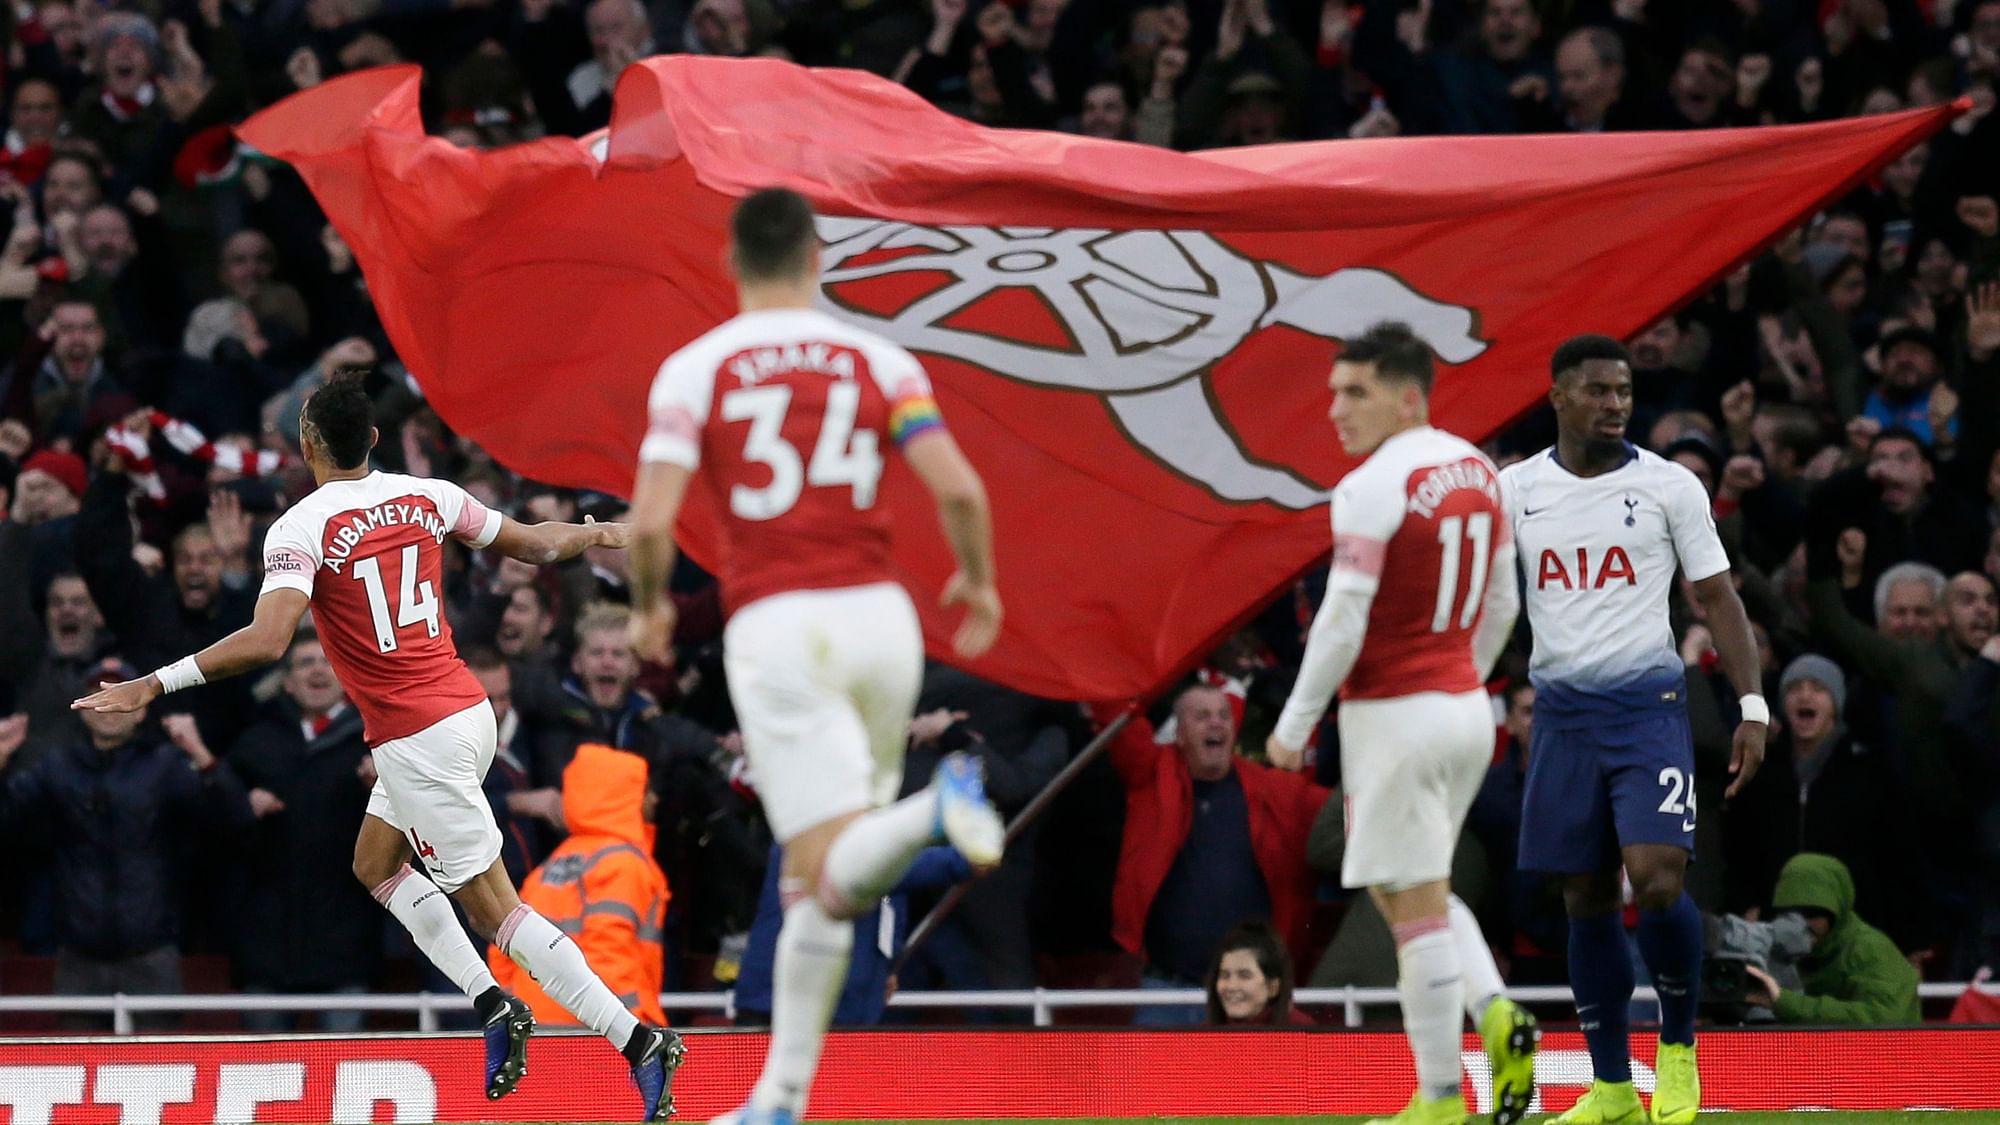 Arsenal beat Tottenham 4-2 on Sunday at the Emirates Stadium in London.